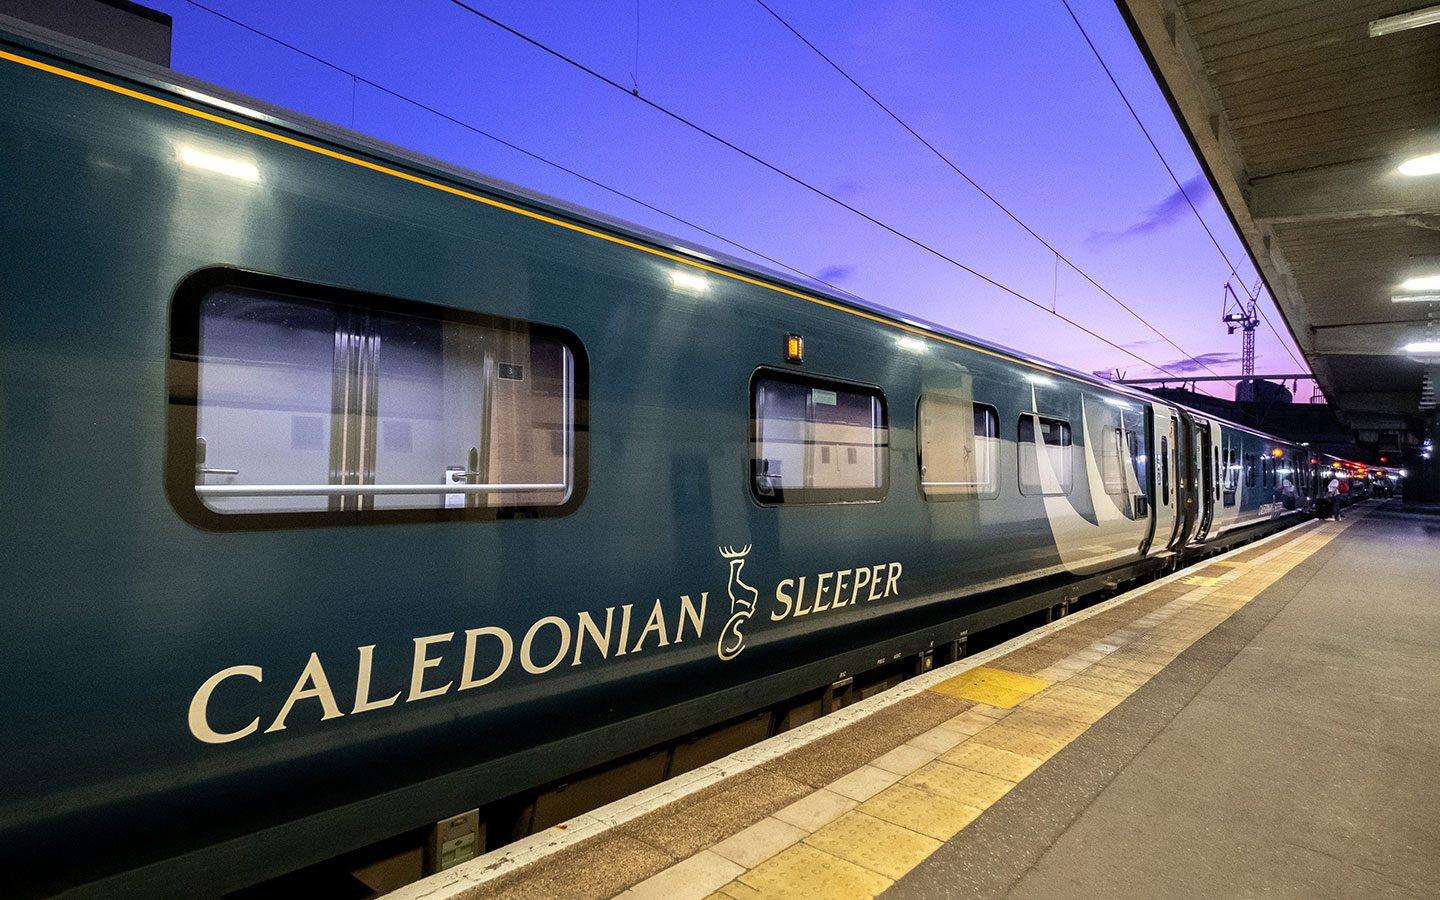 The Caledonian Sleeper train in Scotland